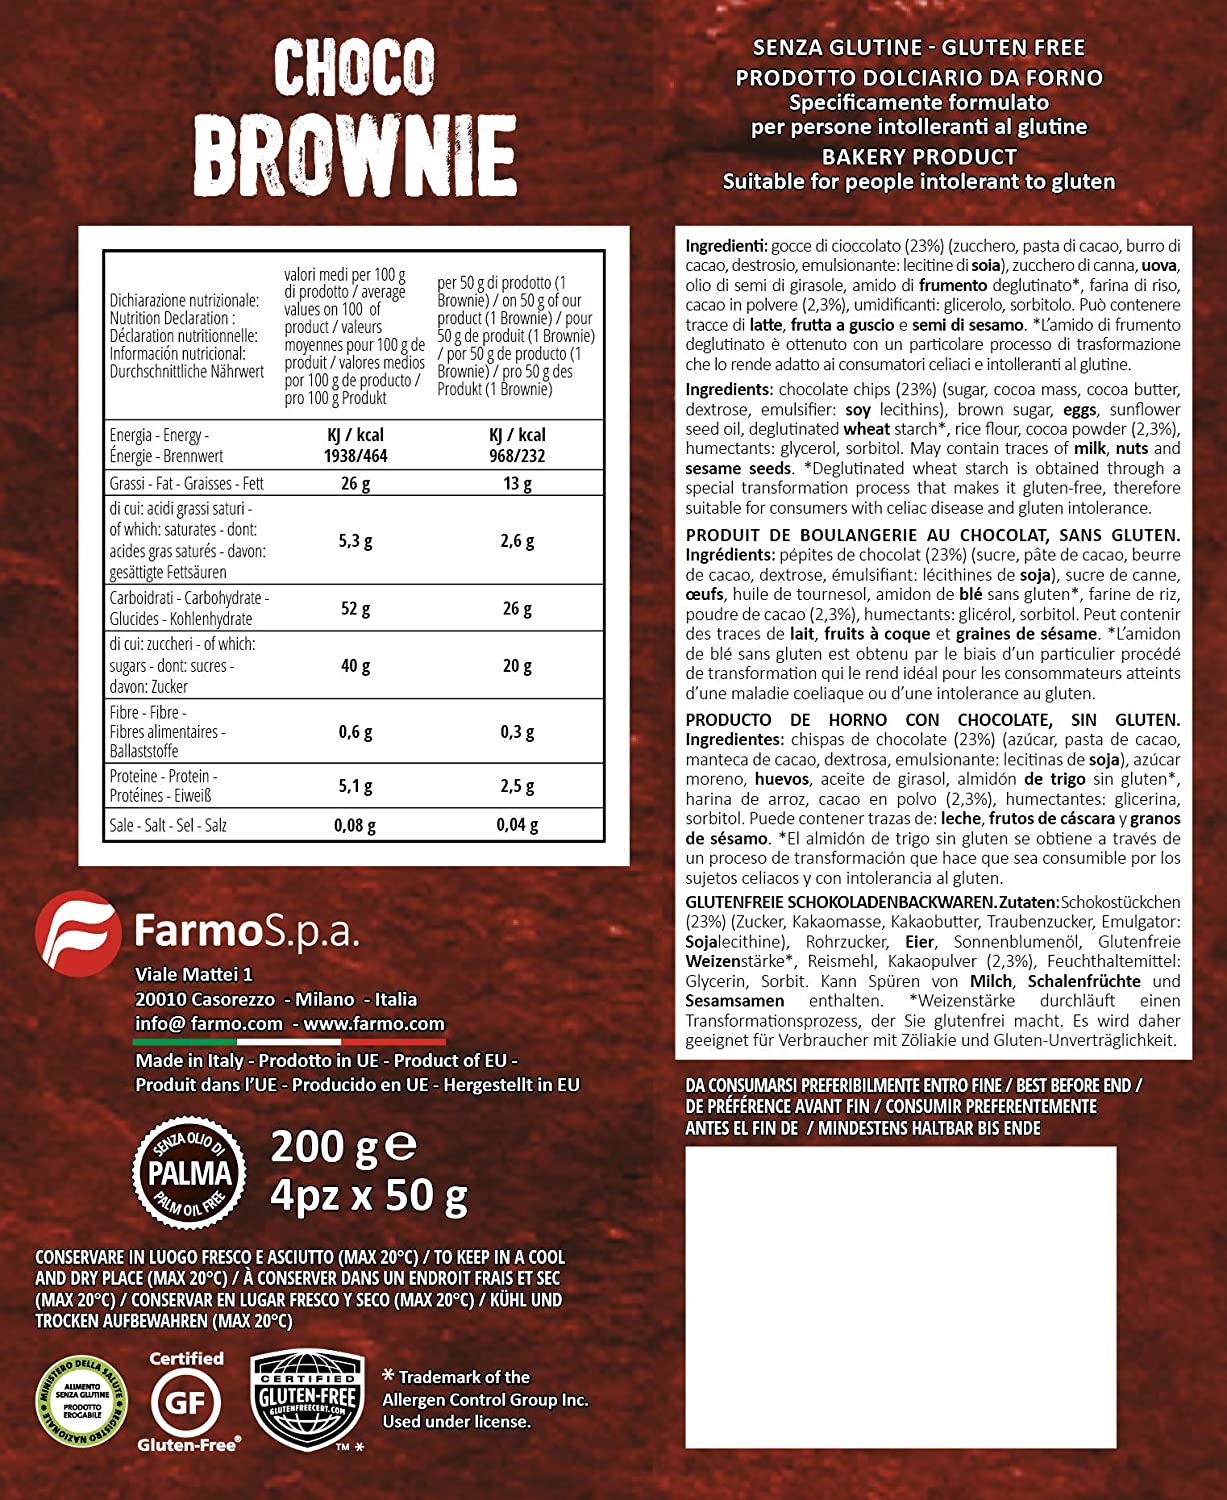 FARMO Choco Brownie gluten-free